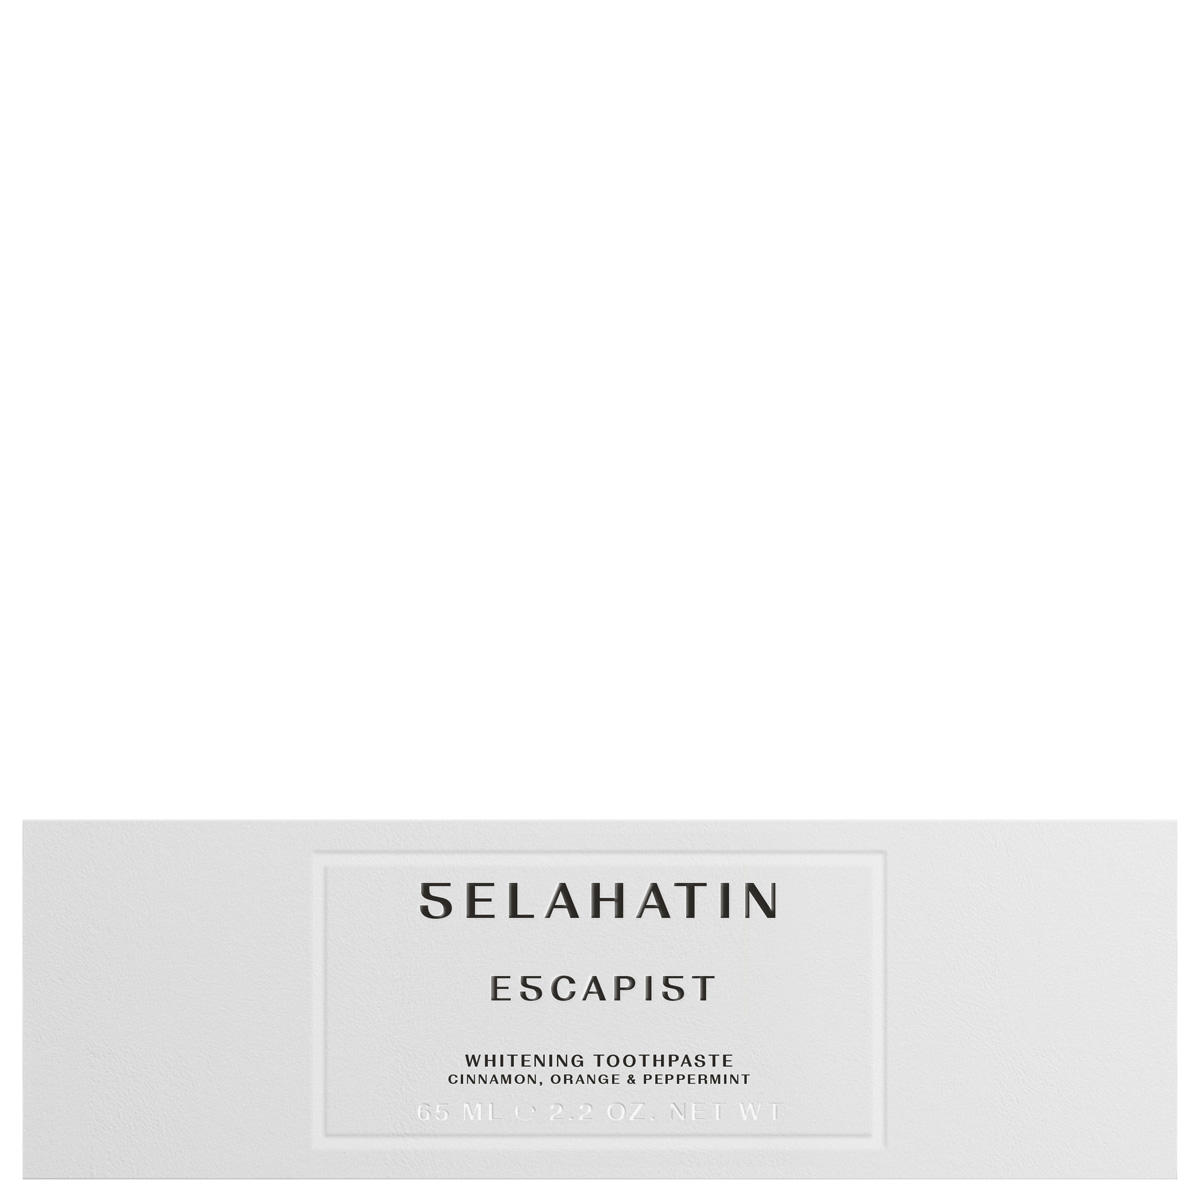 Selahatin Whitening Toothpaste Escapist 65 ml - 2